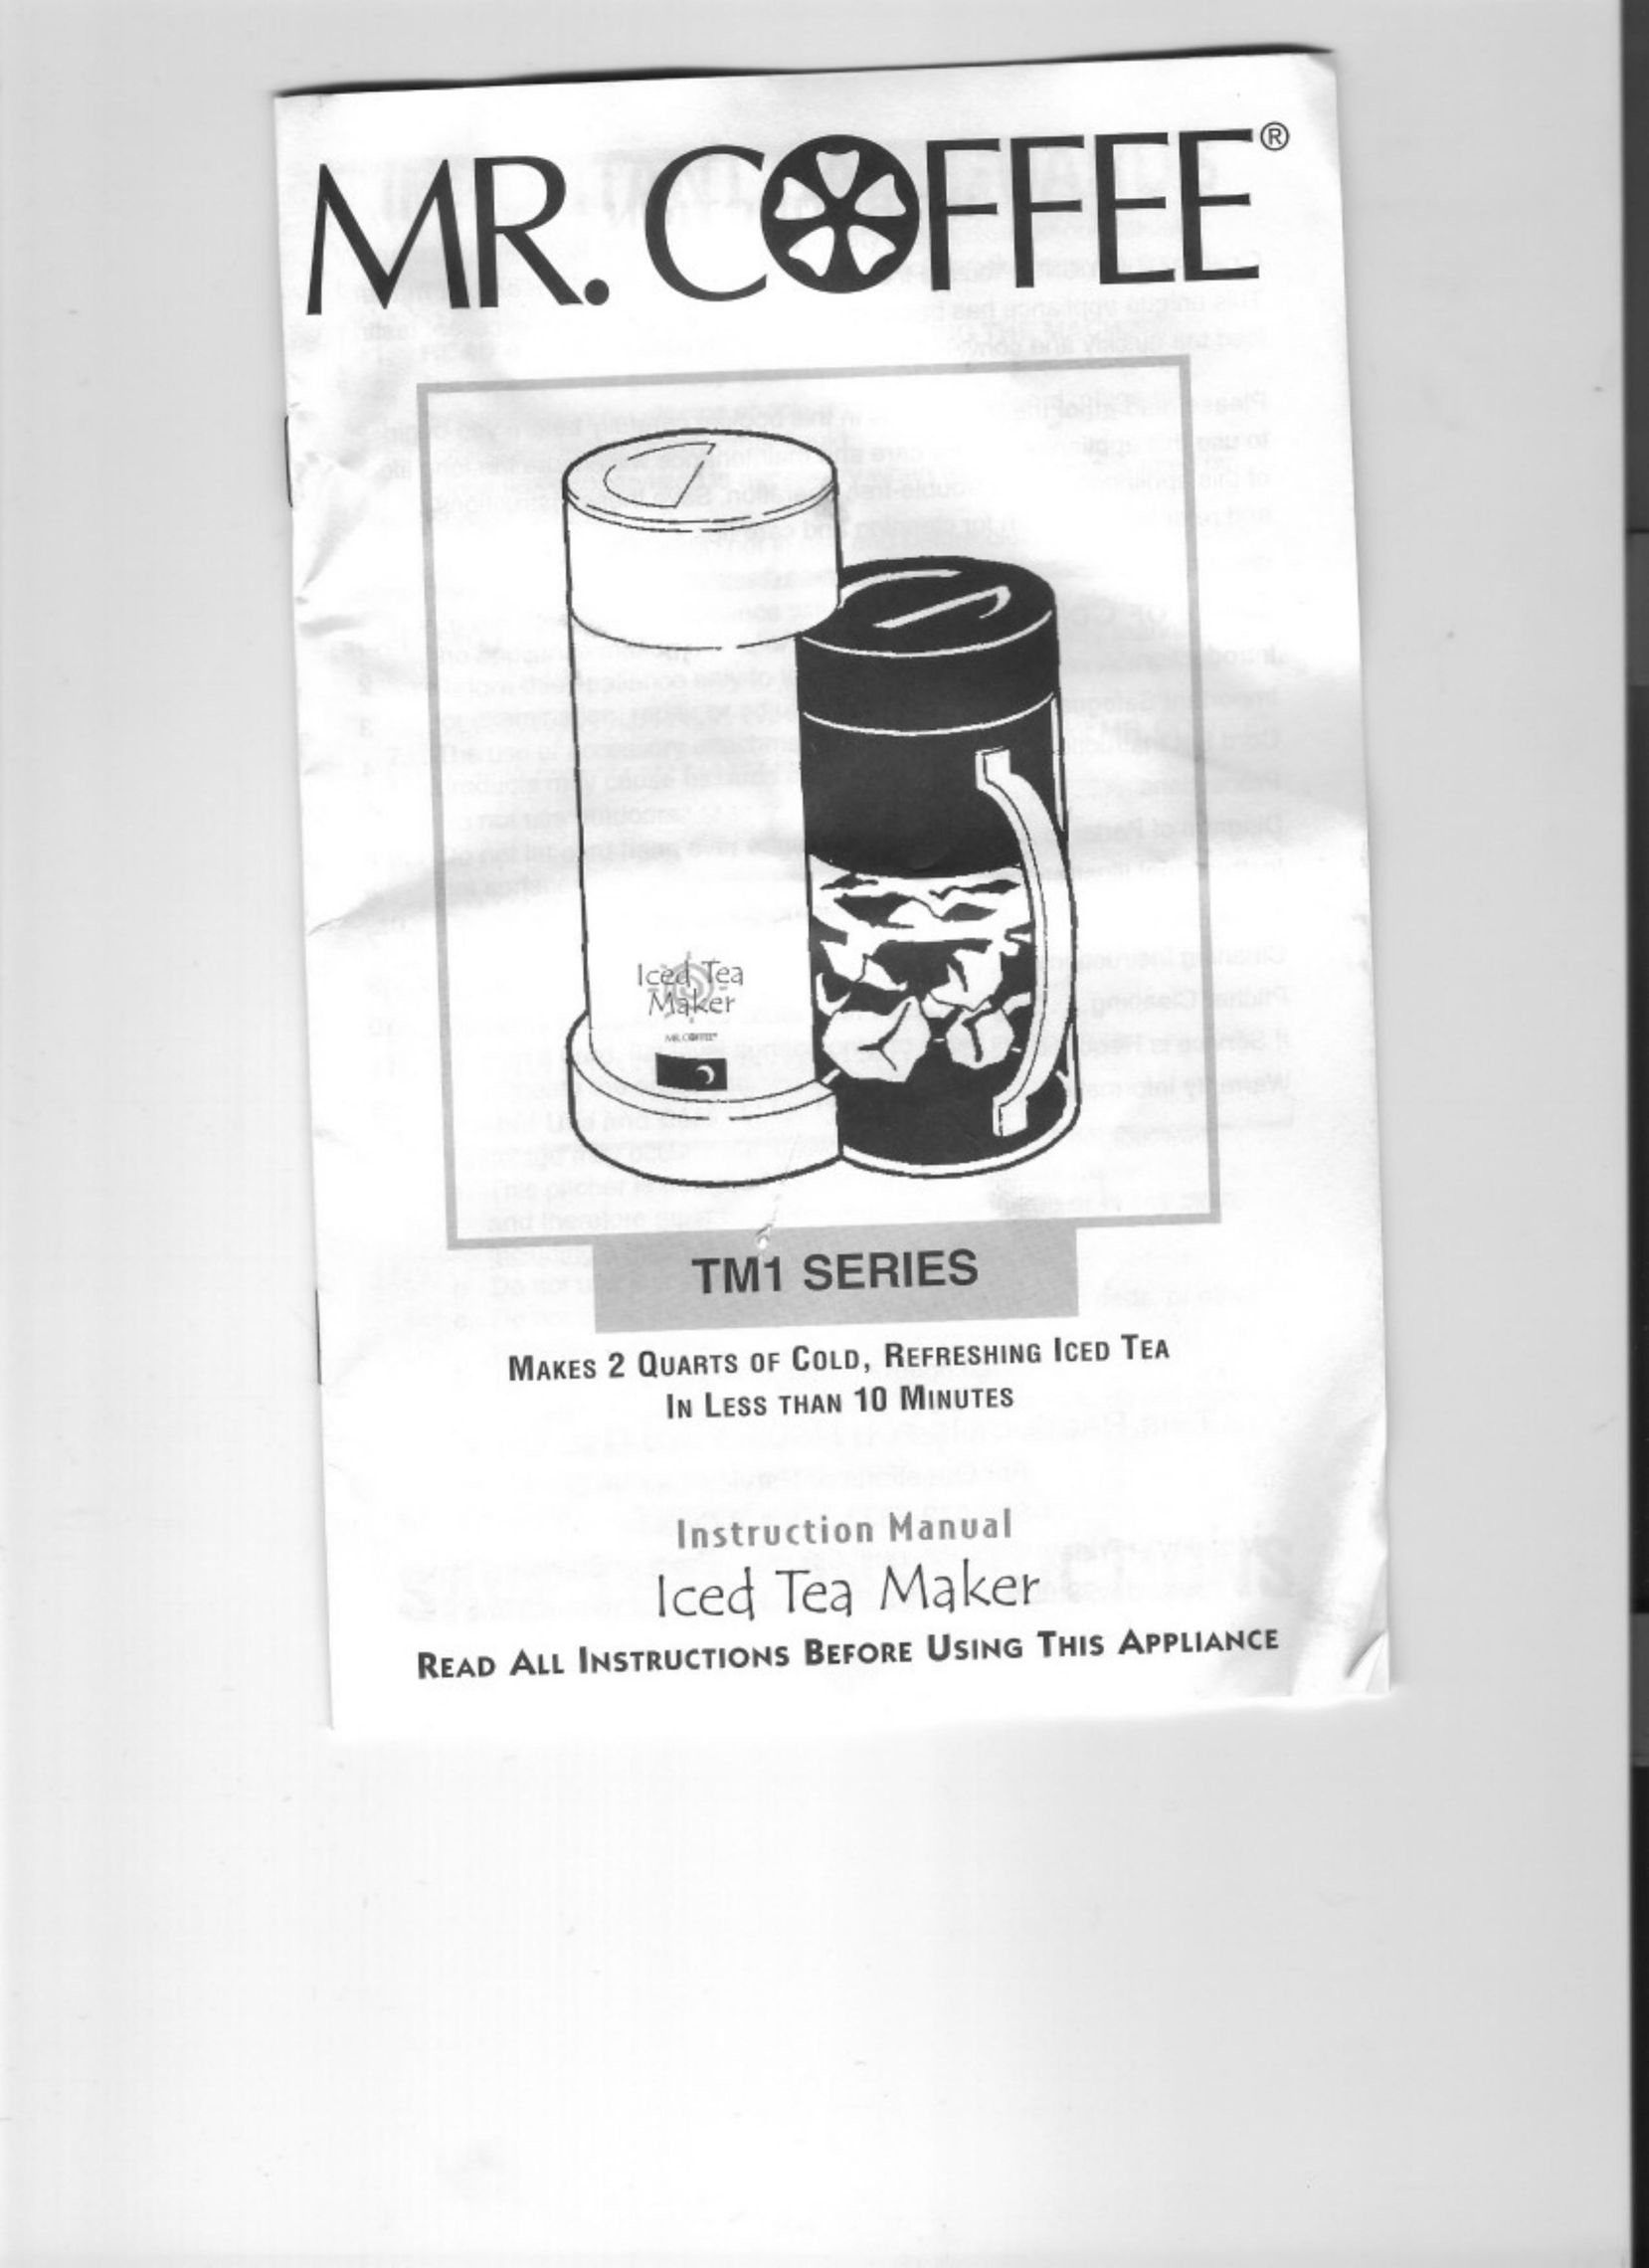 Mr. Coffee TM1 Series Ice Tea Maker User Manual